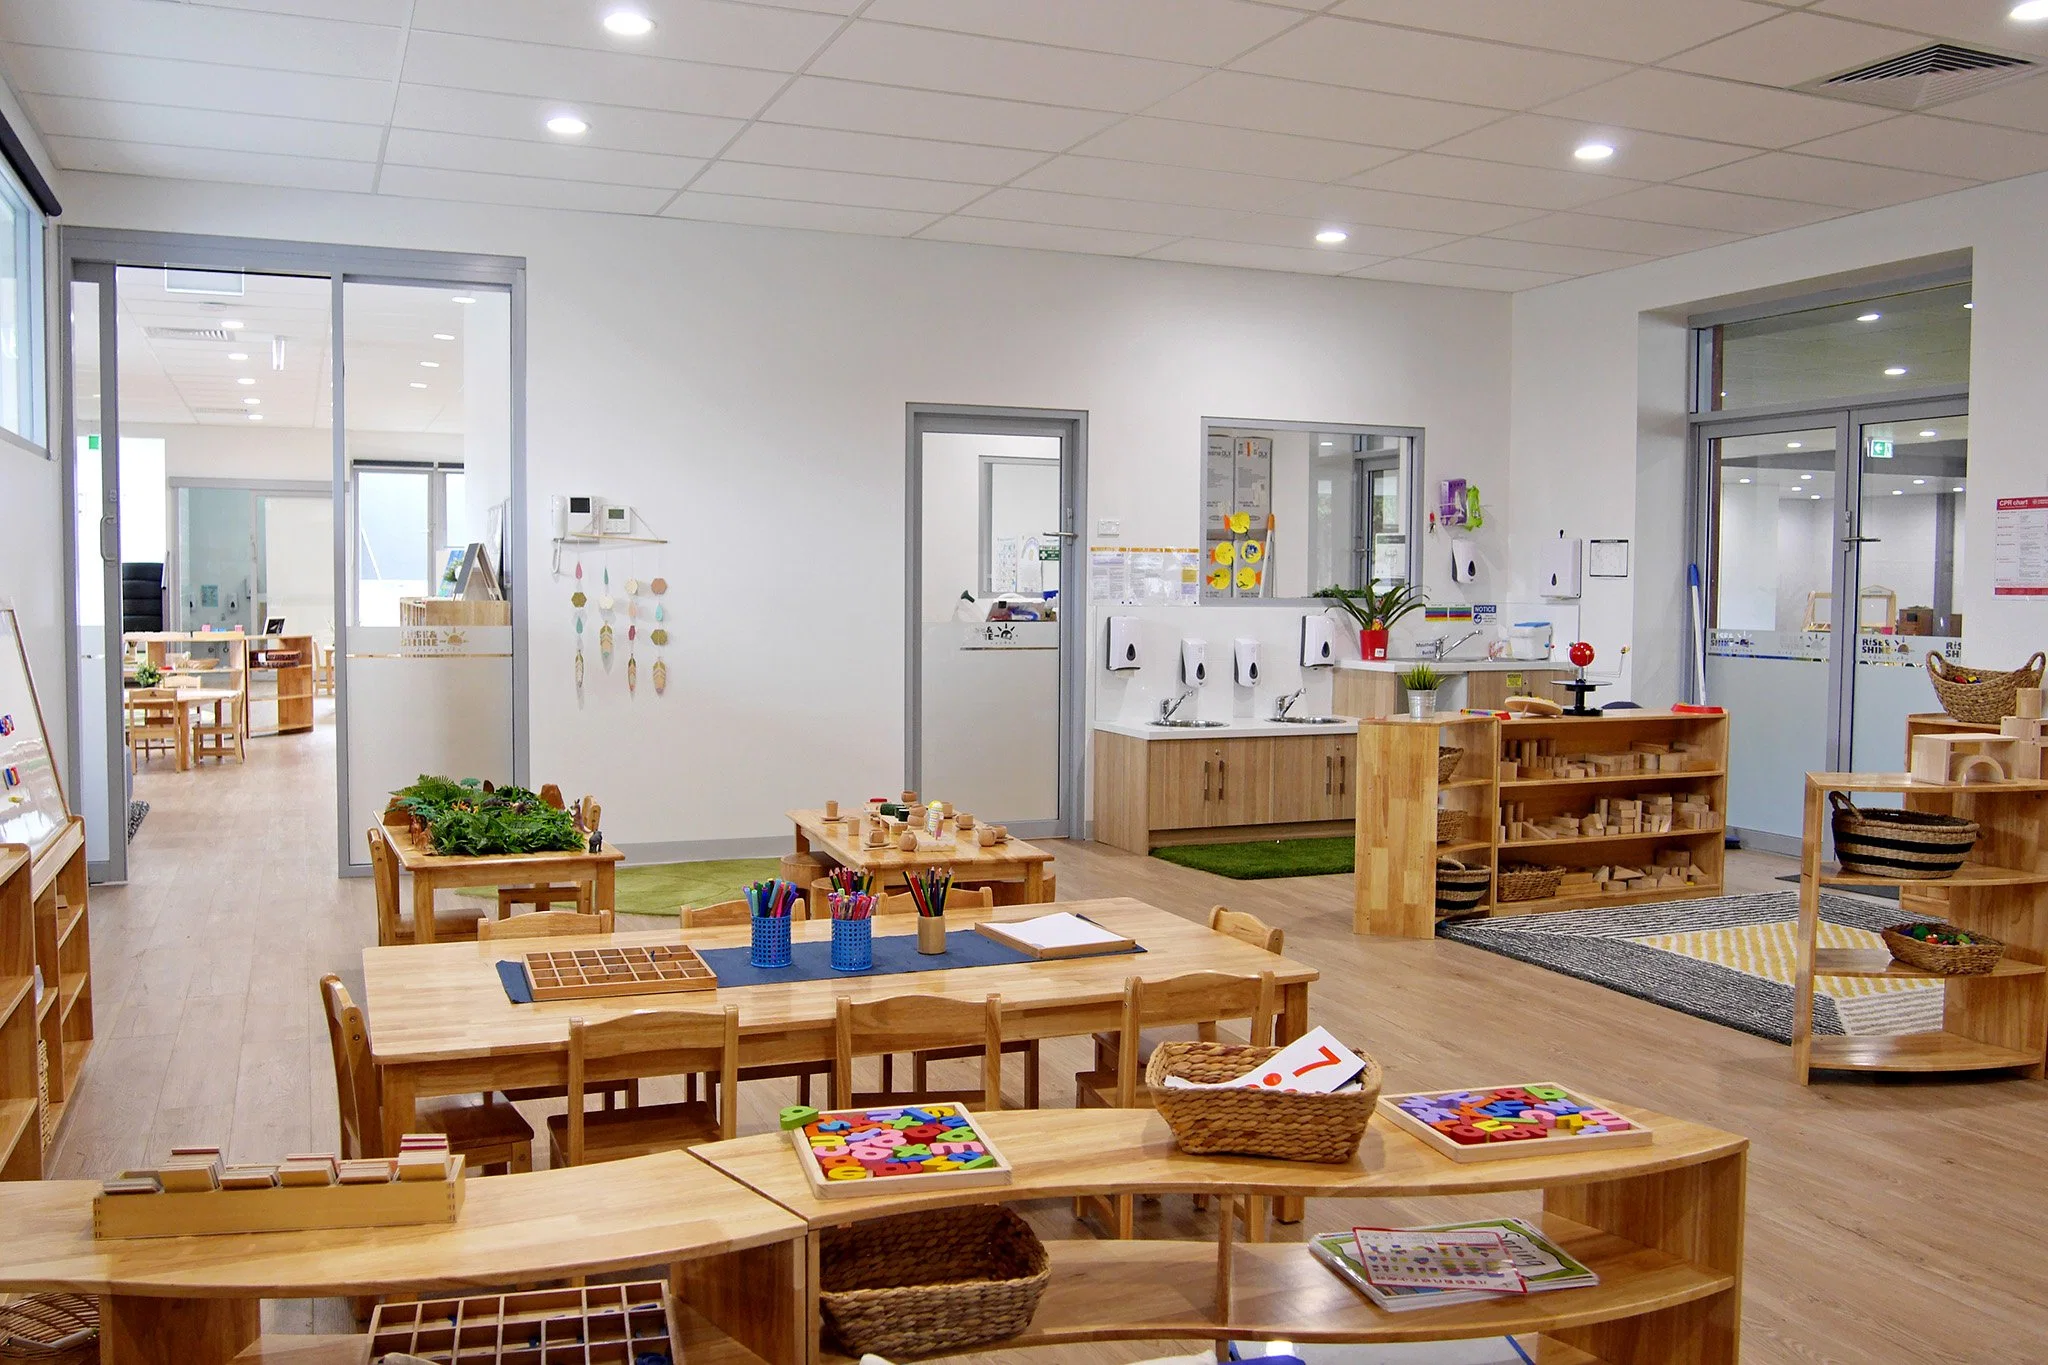 Preschool Kids Furniture , Kindergarten Children Furniture,Baby Wood Furniture,School Classroom Furniture, Modern Room Furniture,Study Table,Nursery Furniture